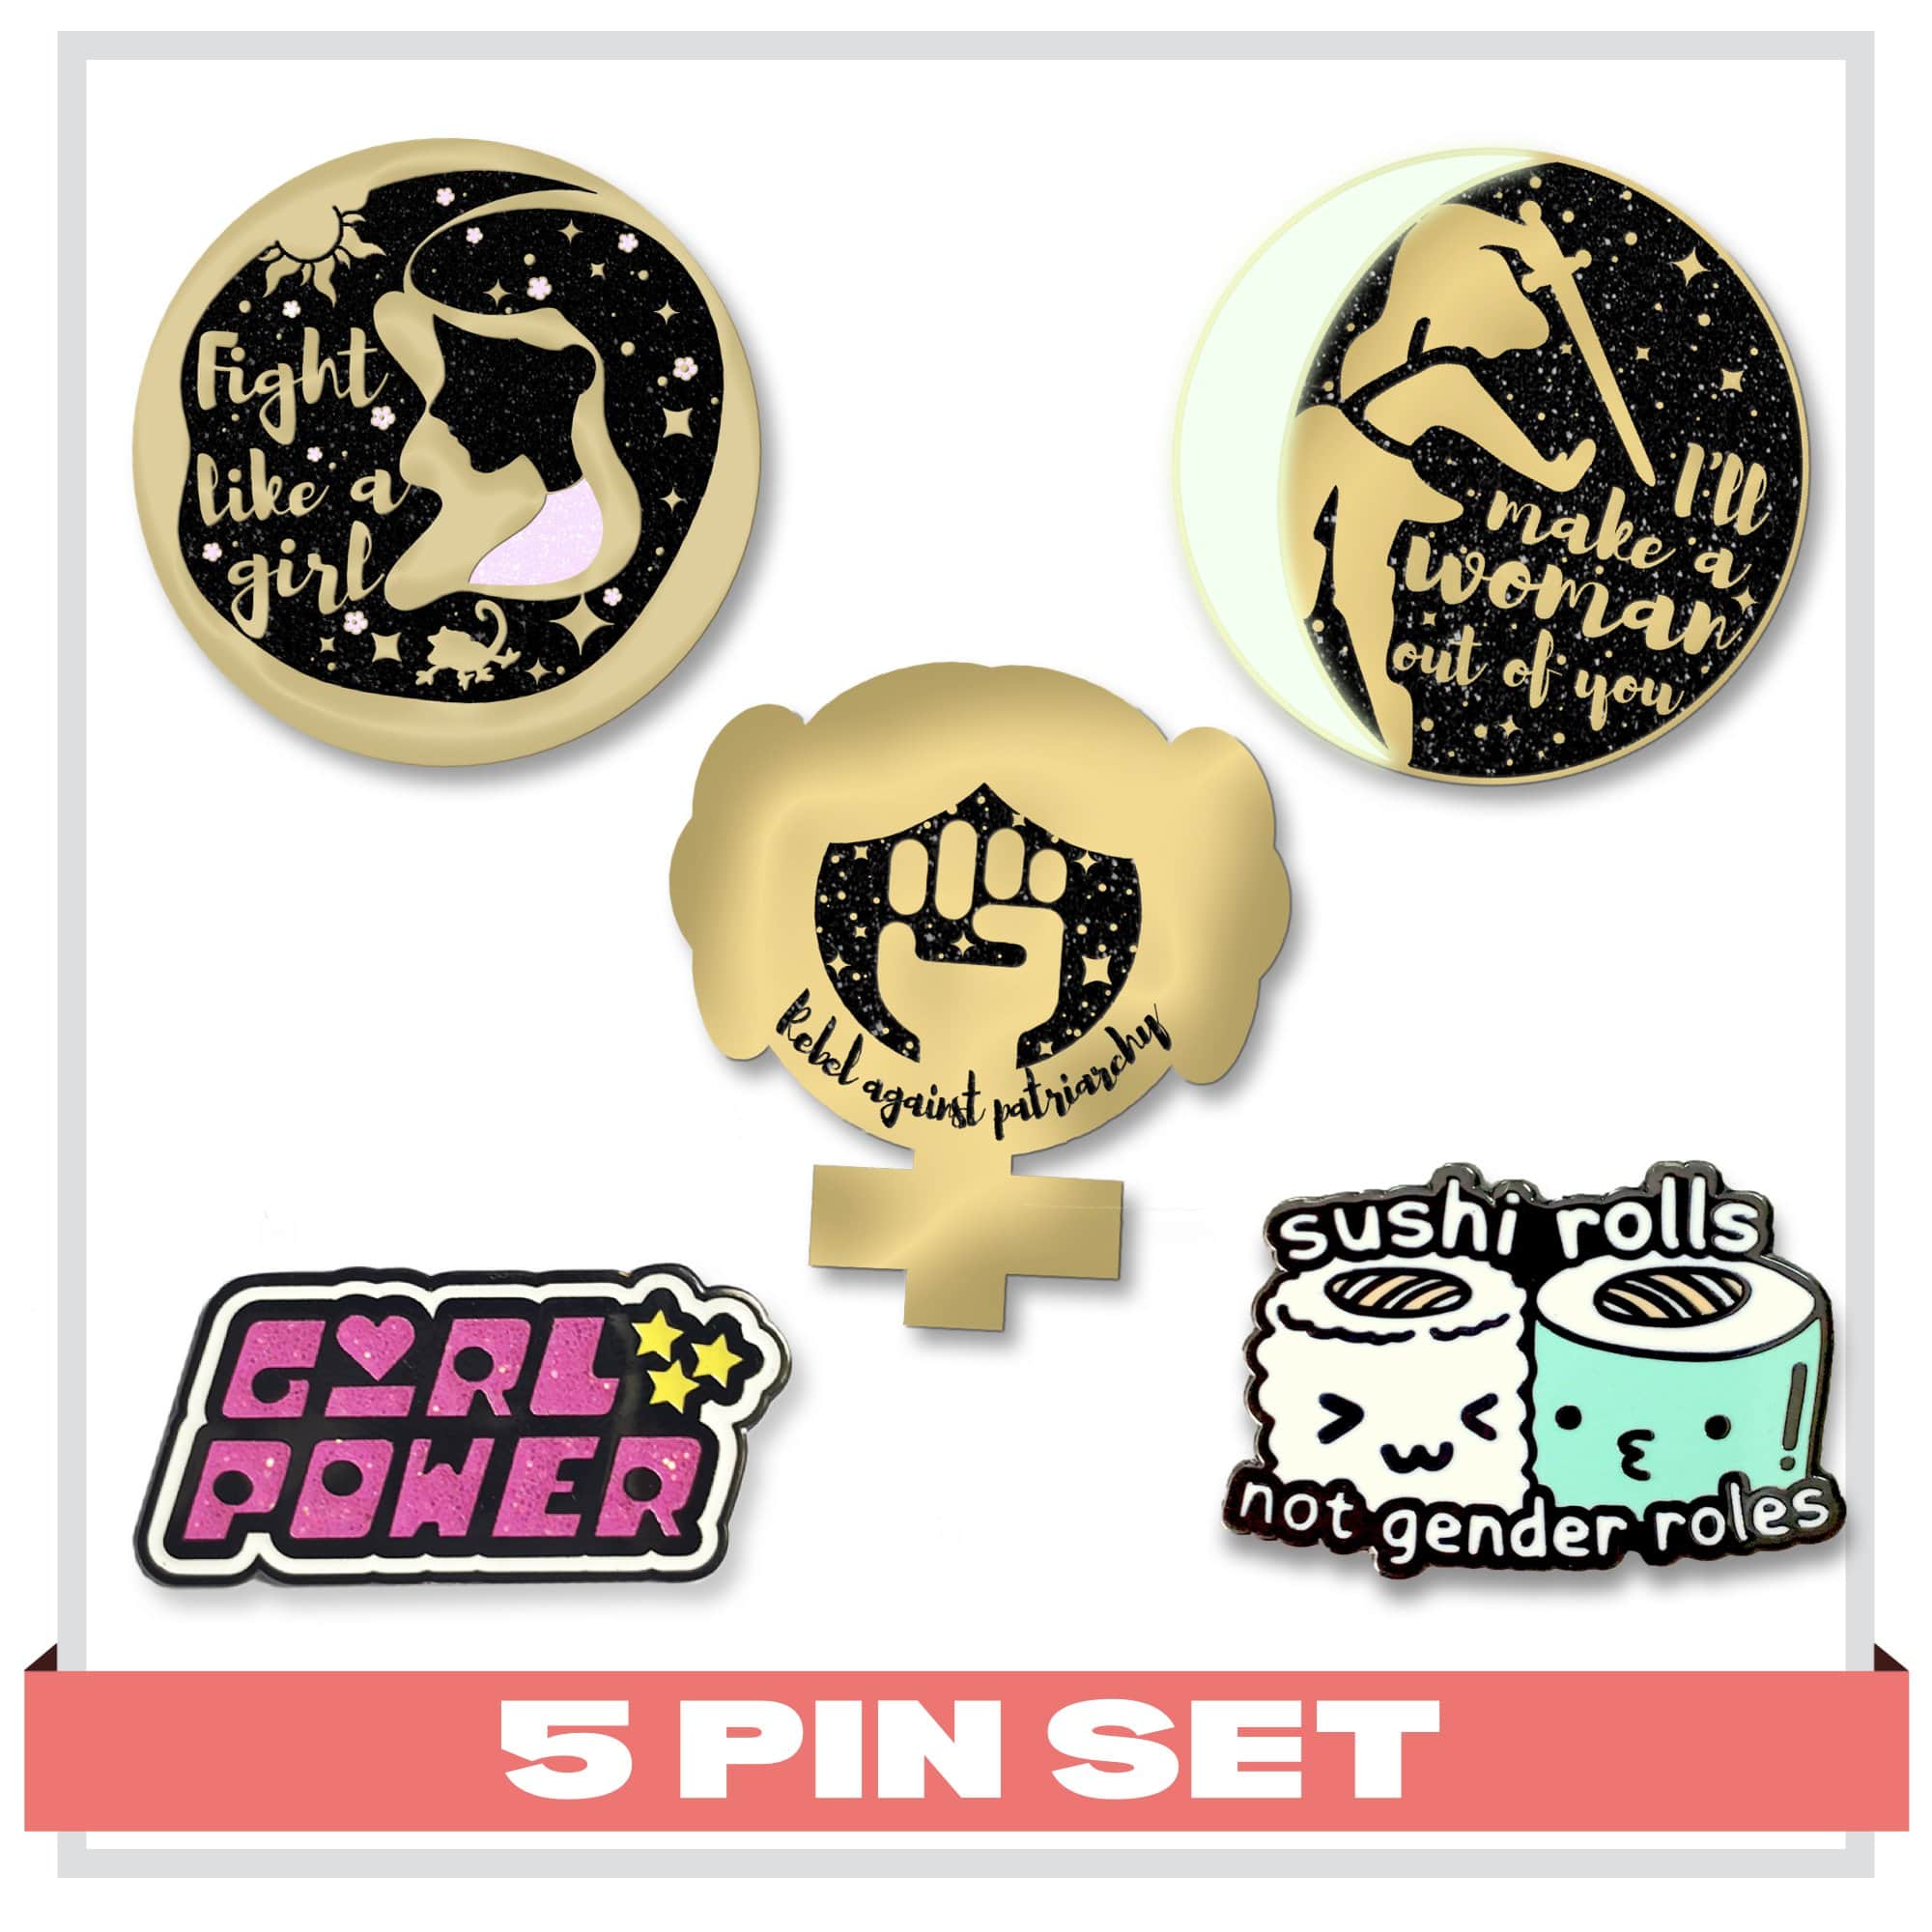 lemeownade Girl Power (5 Pin Set)